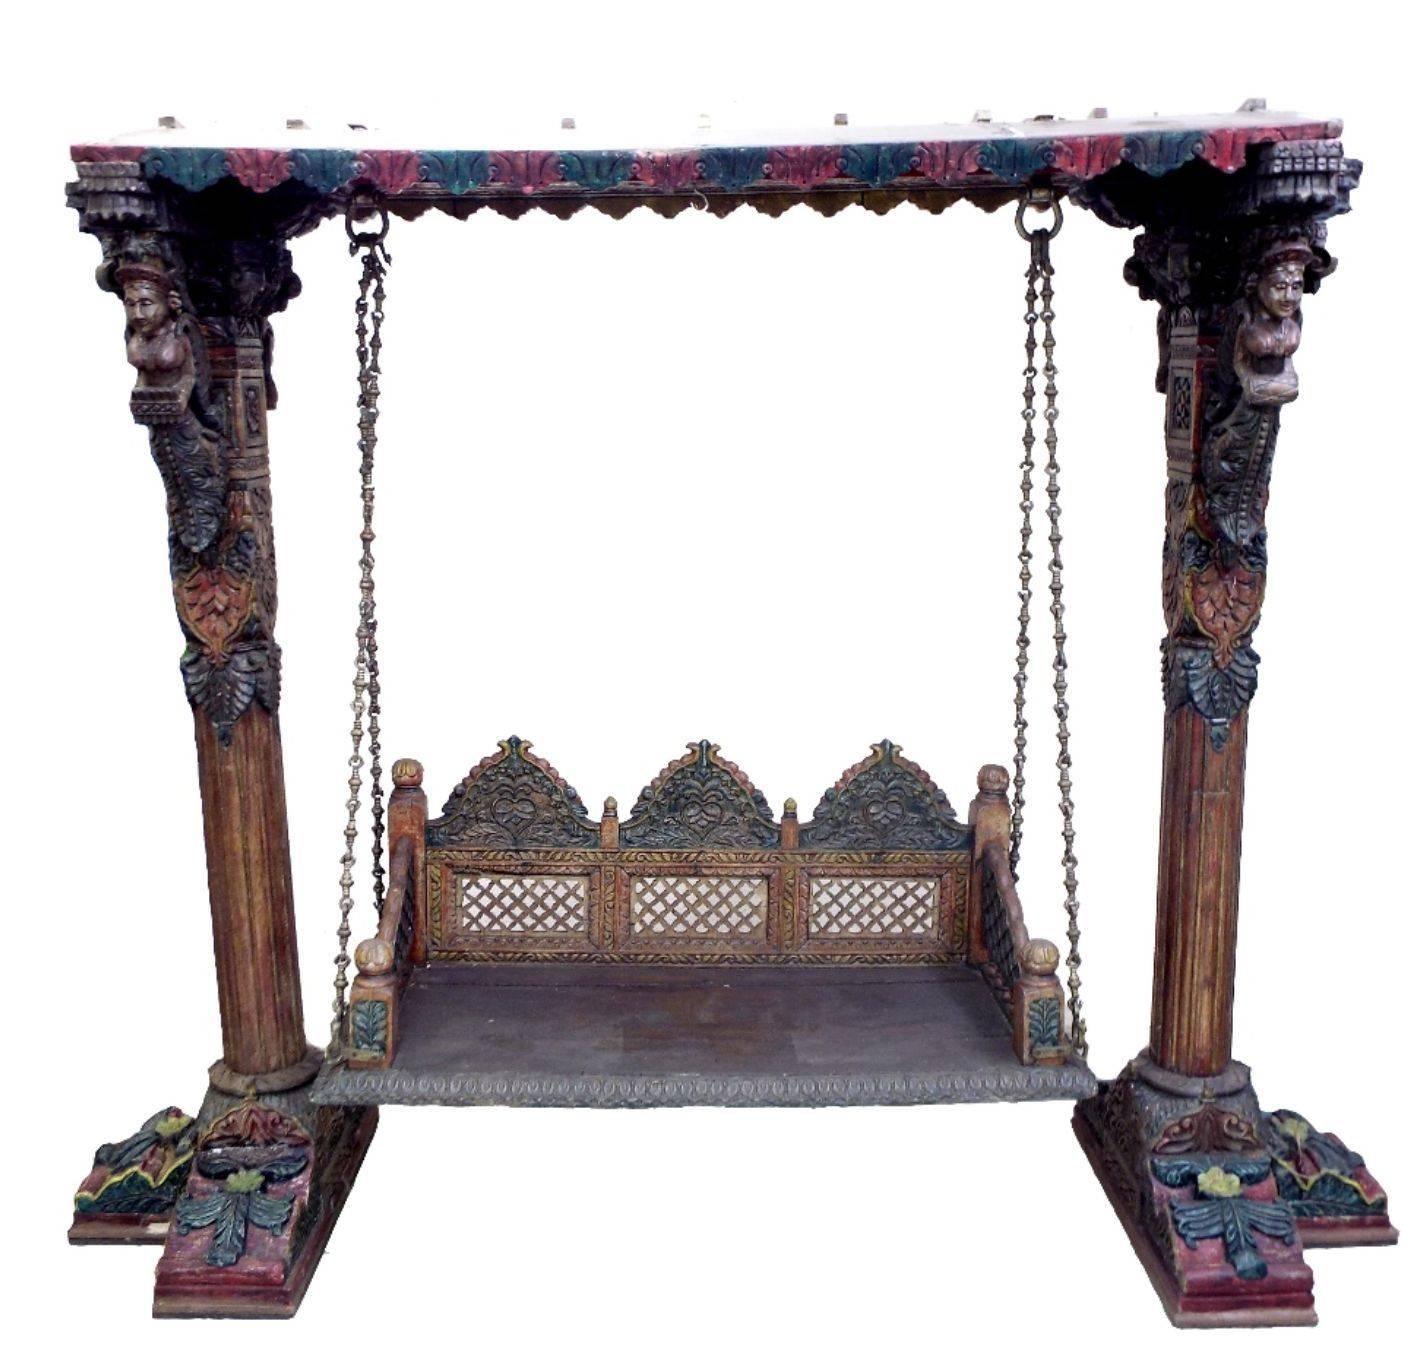 Antique Swing Royal Indian Rajasthani Jodhpur Hand-Carved Jhoola